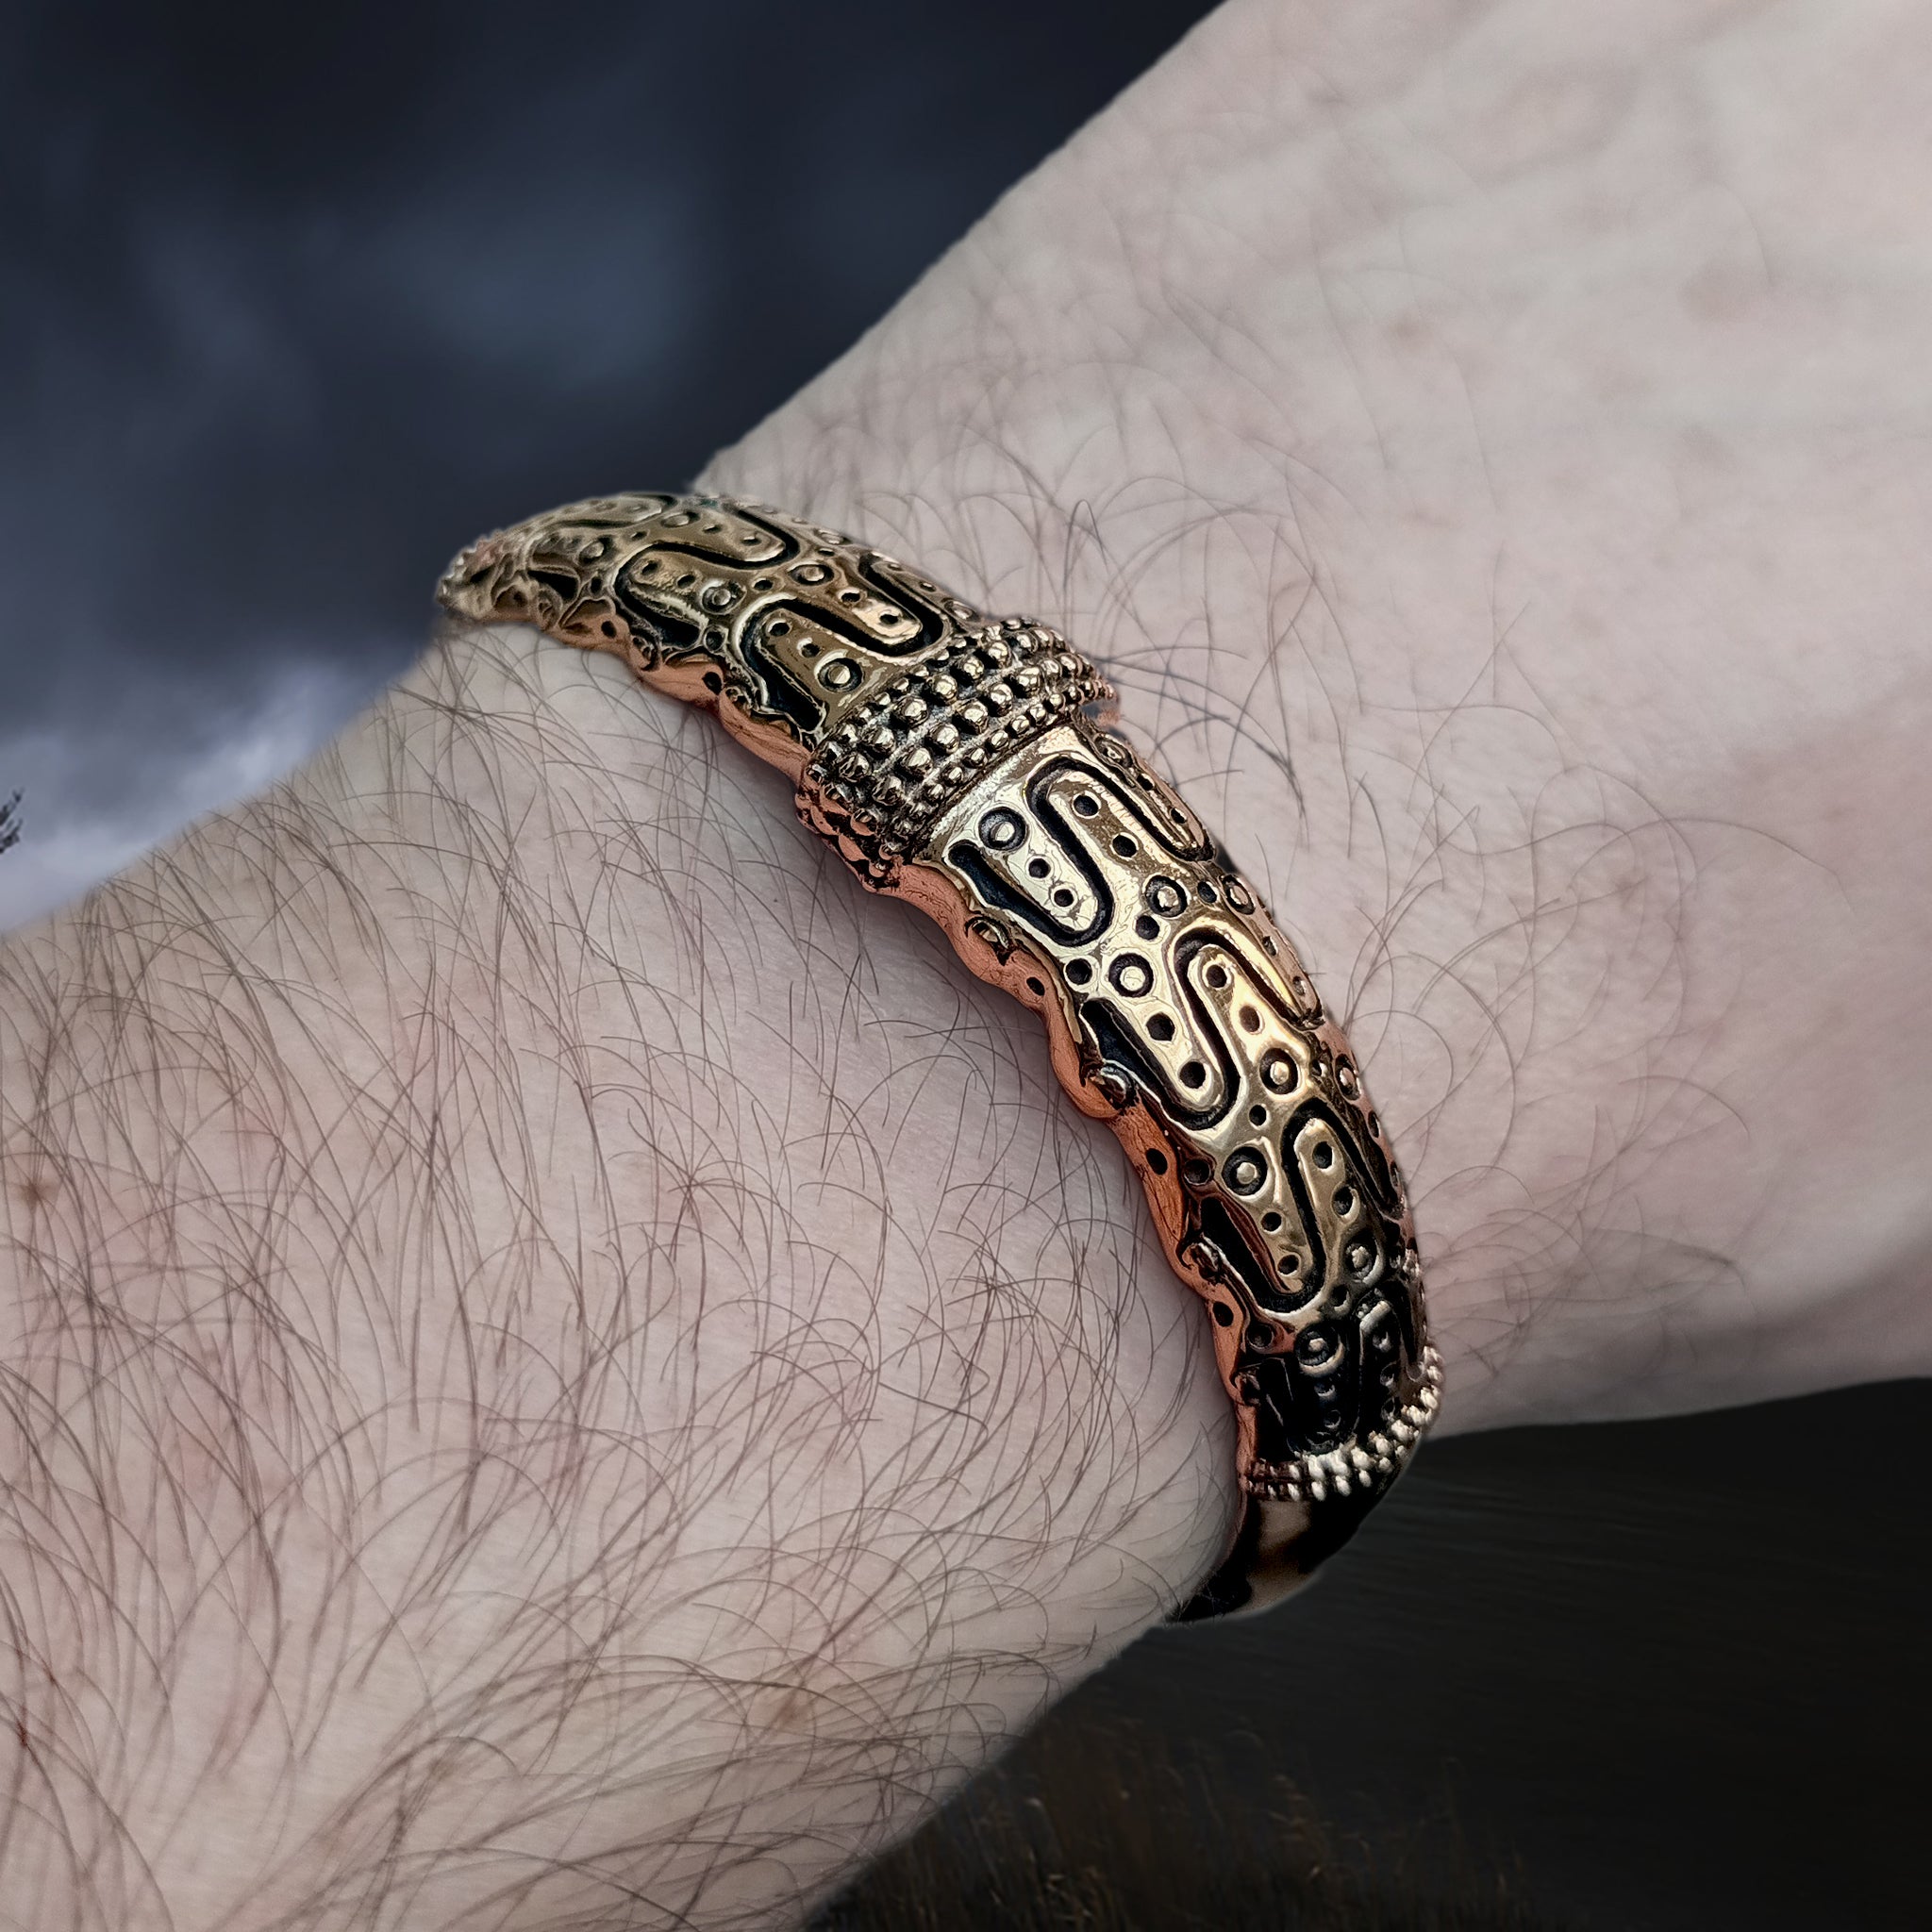 Danish Viking Bronze Bracelet from Falster on Wrist - Angle View